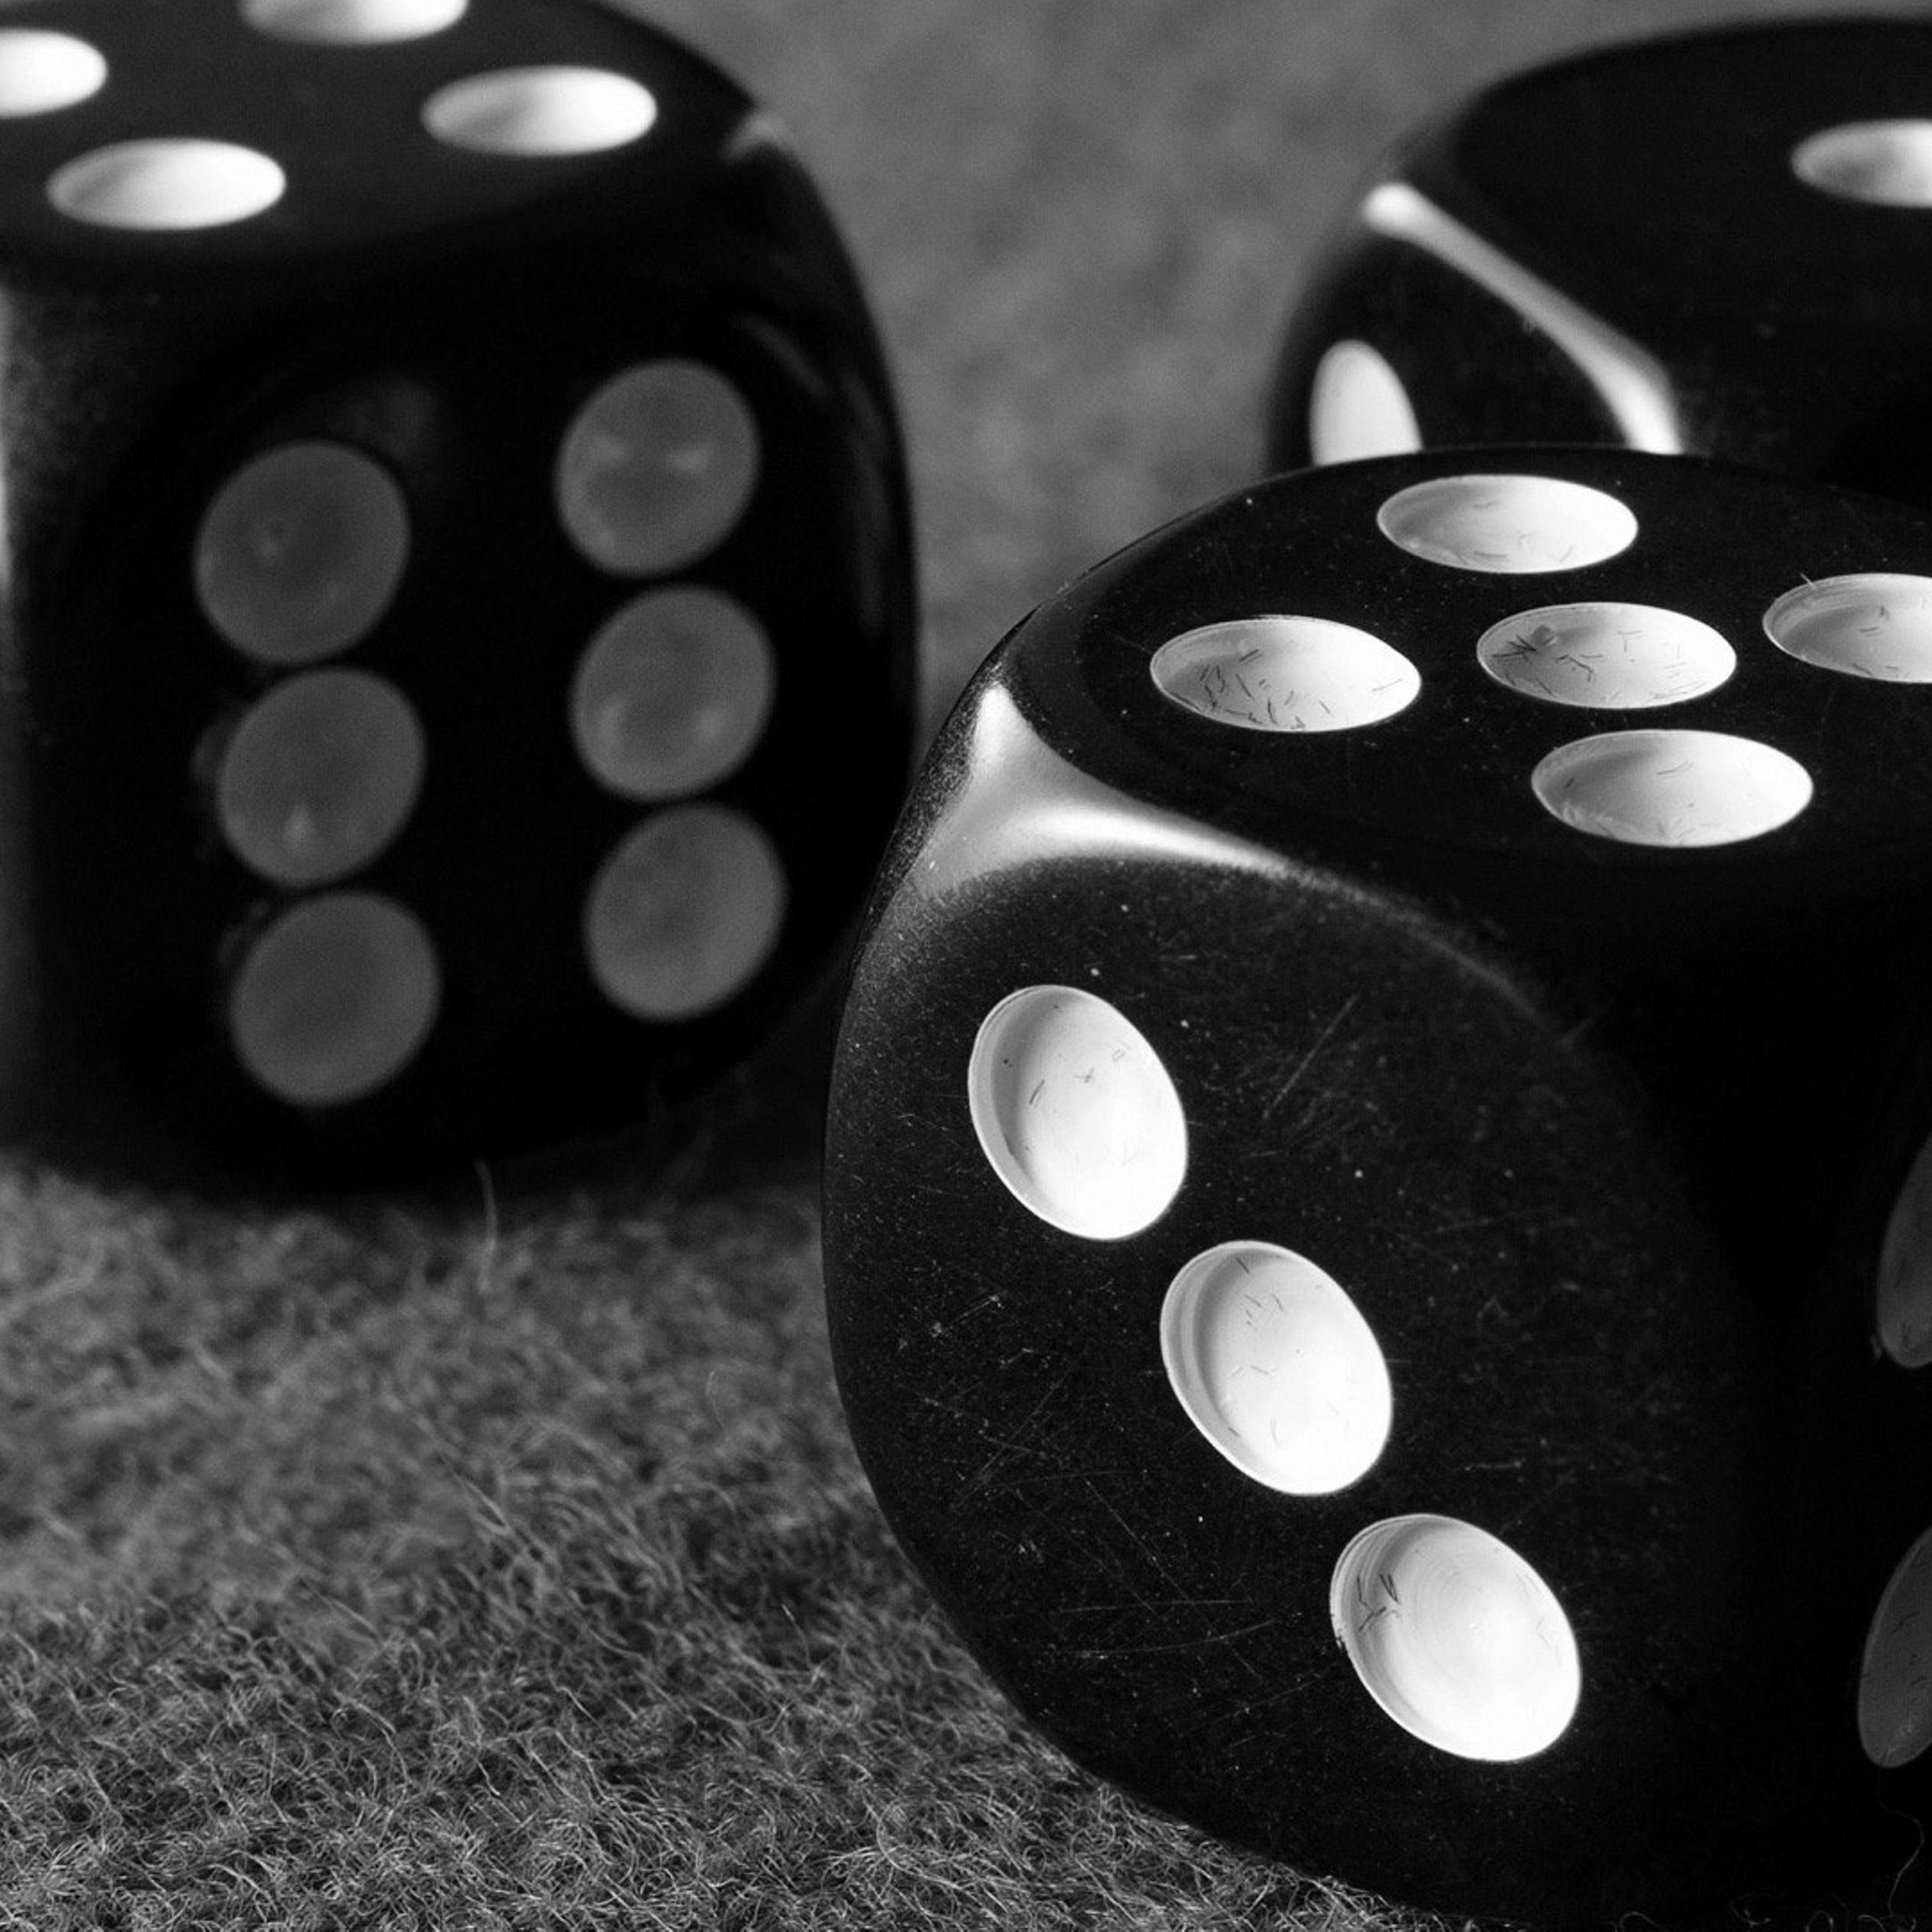 Three black dice